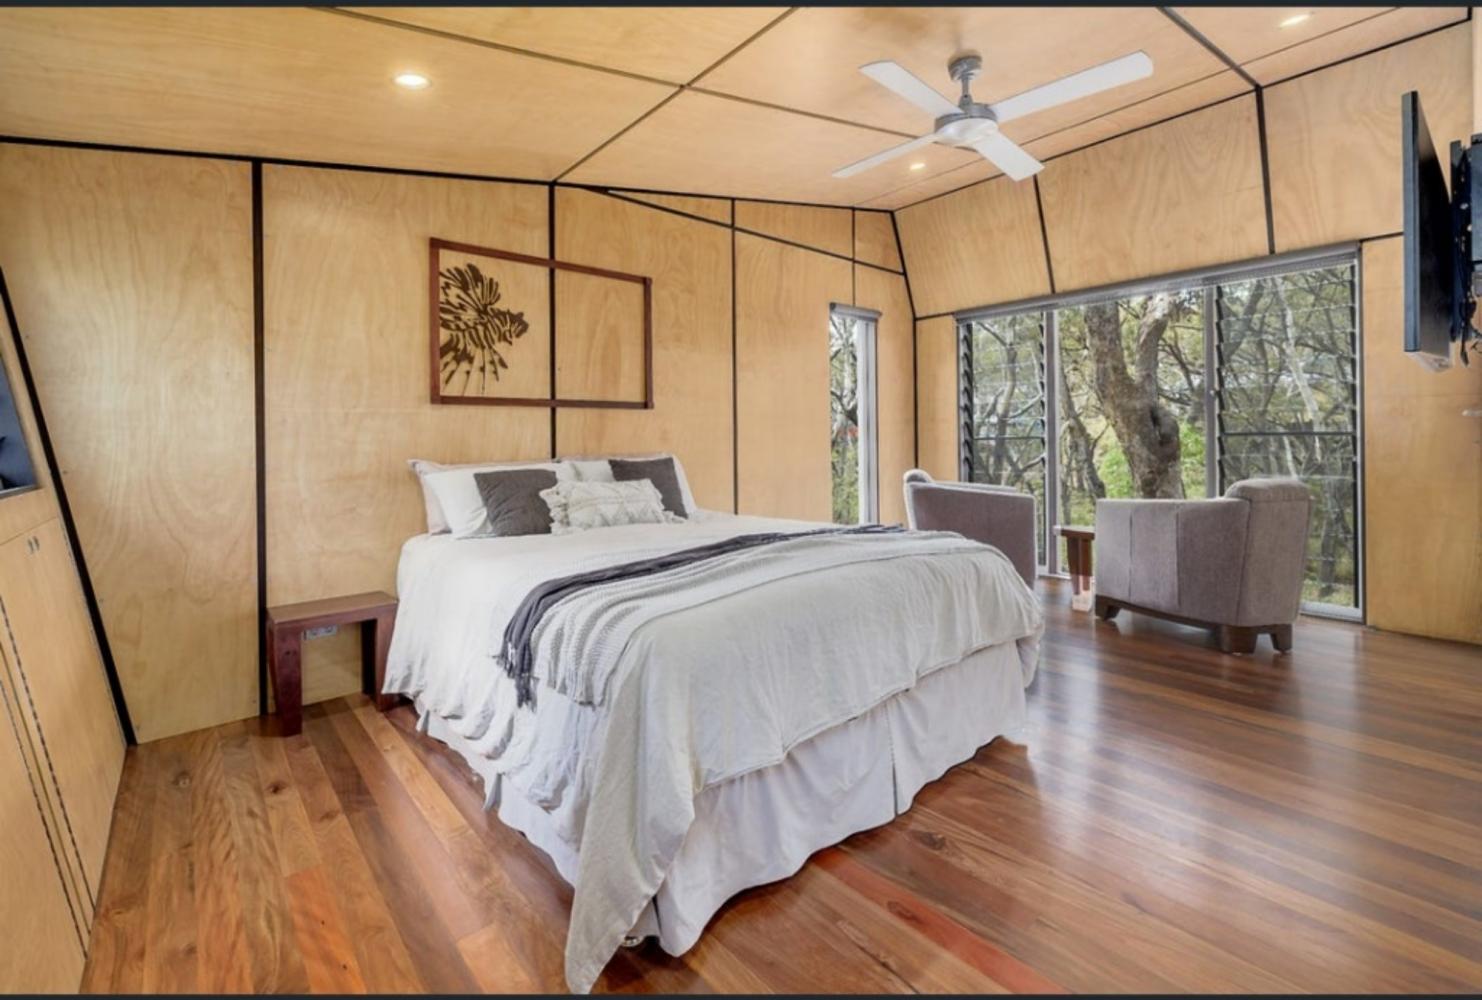 second bedroom with queen bed, ceiling fan, built in robe